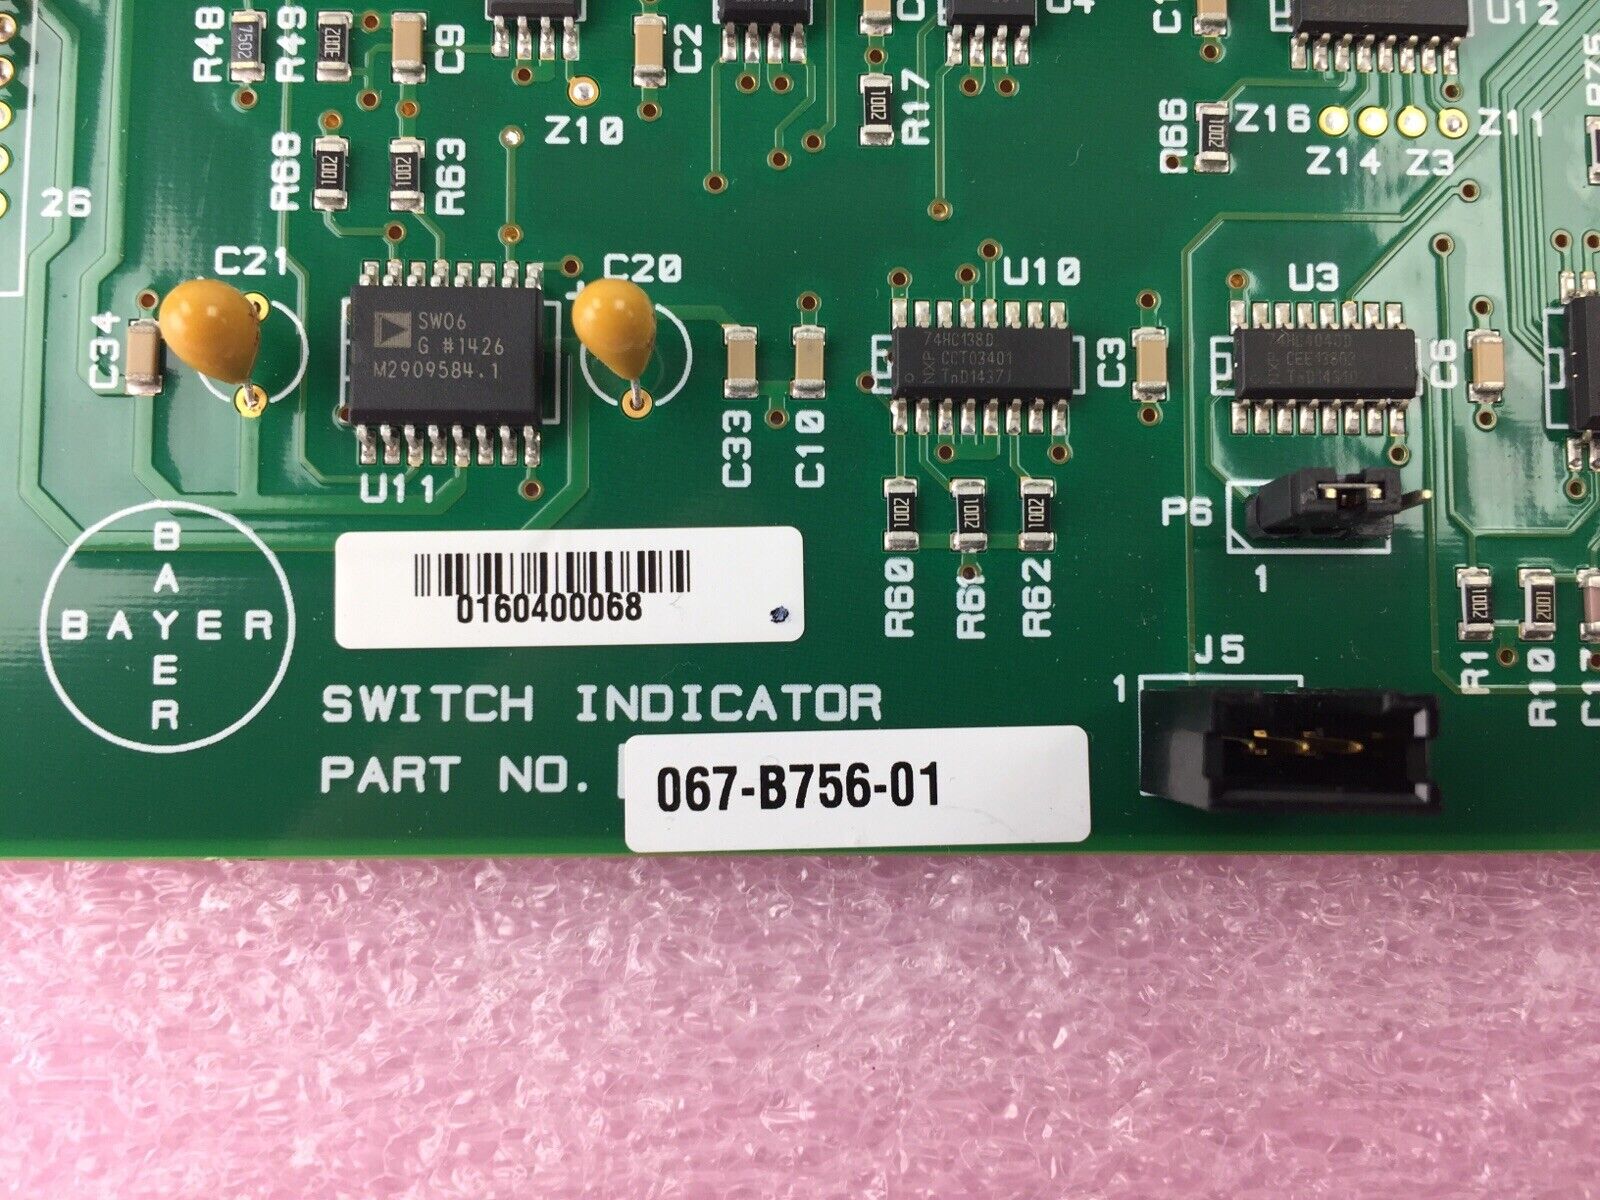 Siemens Bayer 067-B756-01 Switch Indicator Board